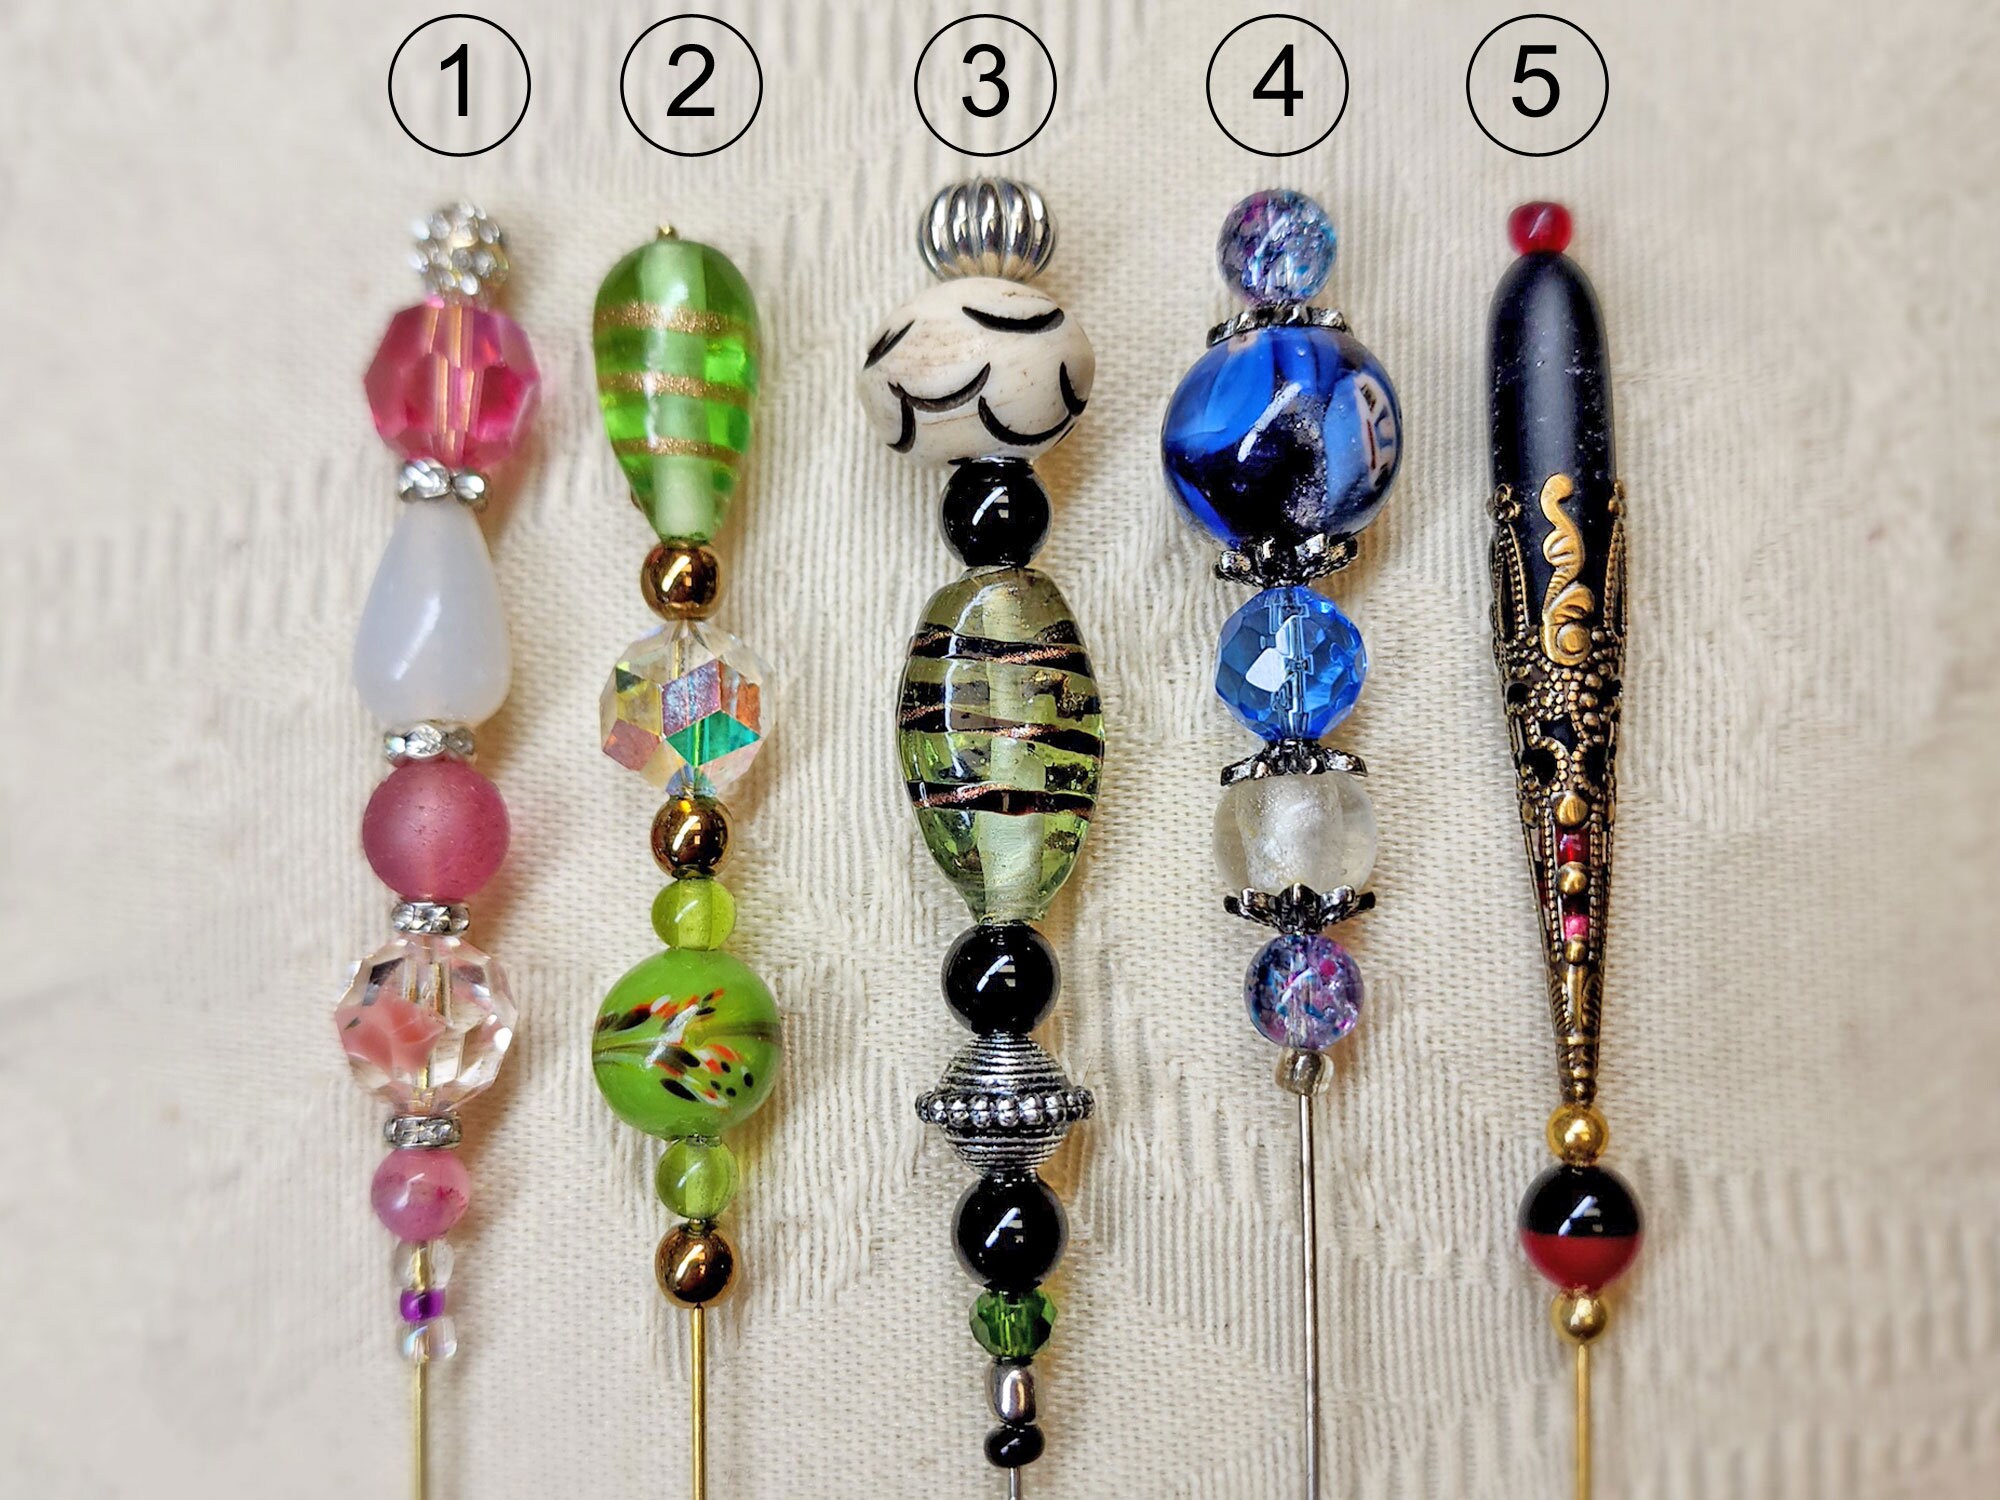 Rose Hijab Pin, Rose Lapel Pin, Hat Stick Pin, Brooch, Silver, Metallic  Gray, Ramadan Eid Gift, Lapel Pin for Men, Pave Style Rhinestone 